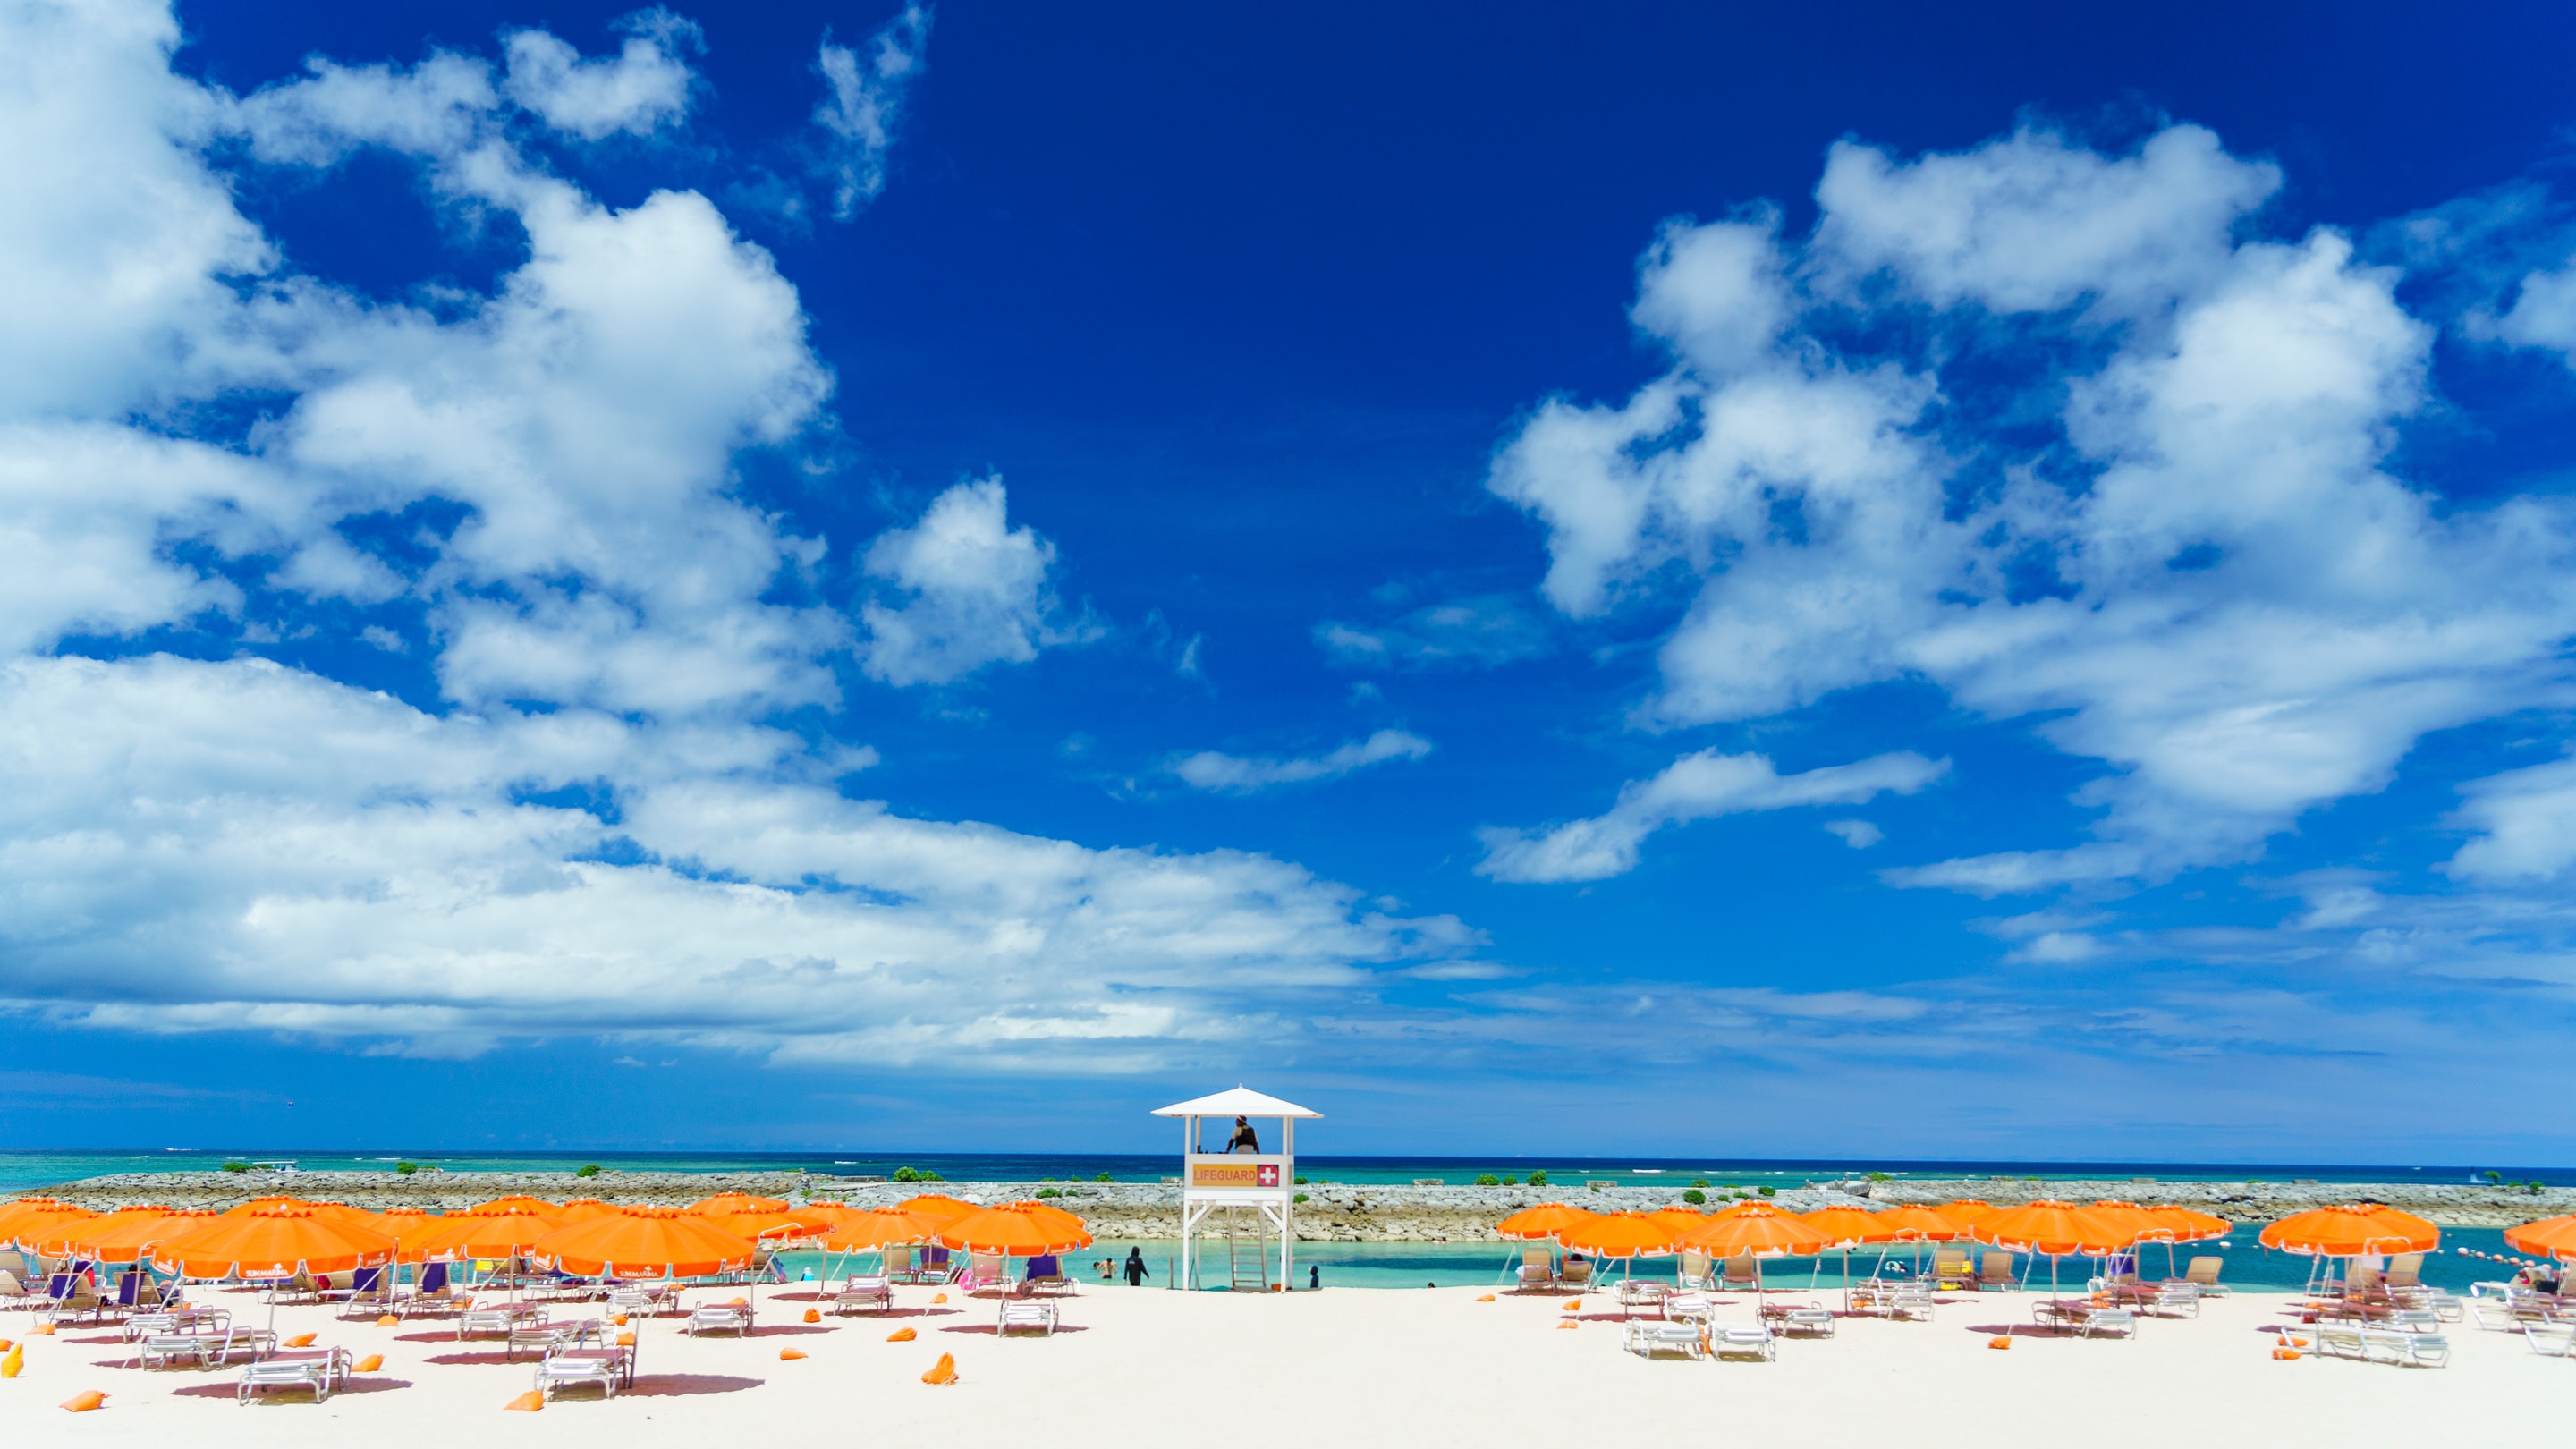 Sunmarina beach with orange umbrellas, blue skies and fluffy clouds